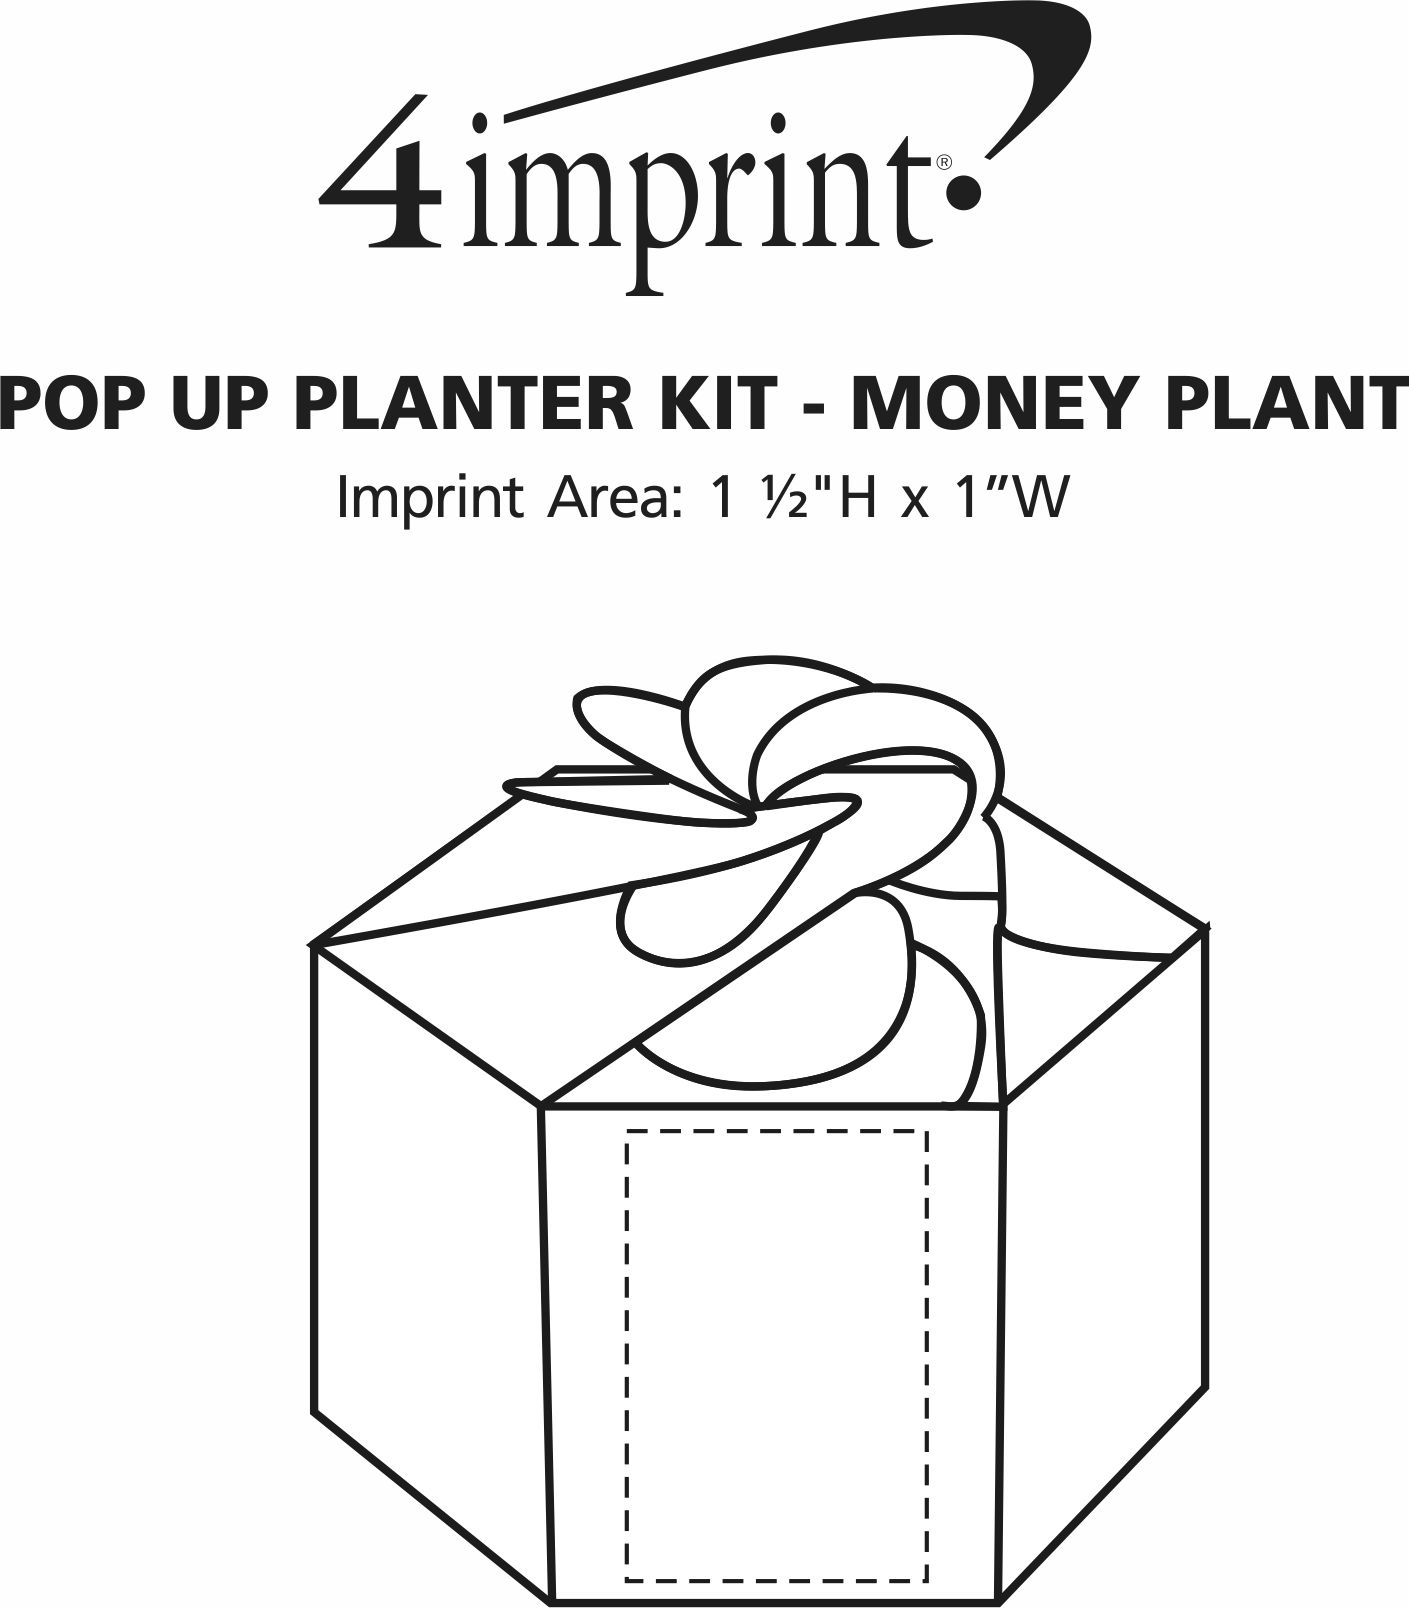 Imprint Area of Pop Up Planter Kit - Money Plant